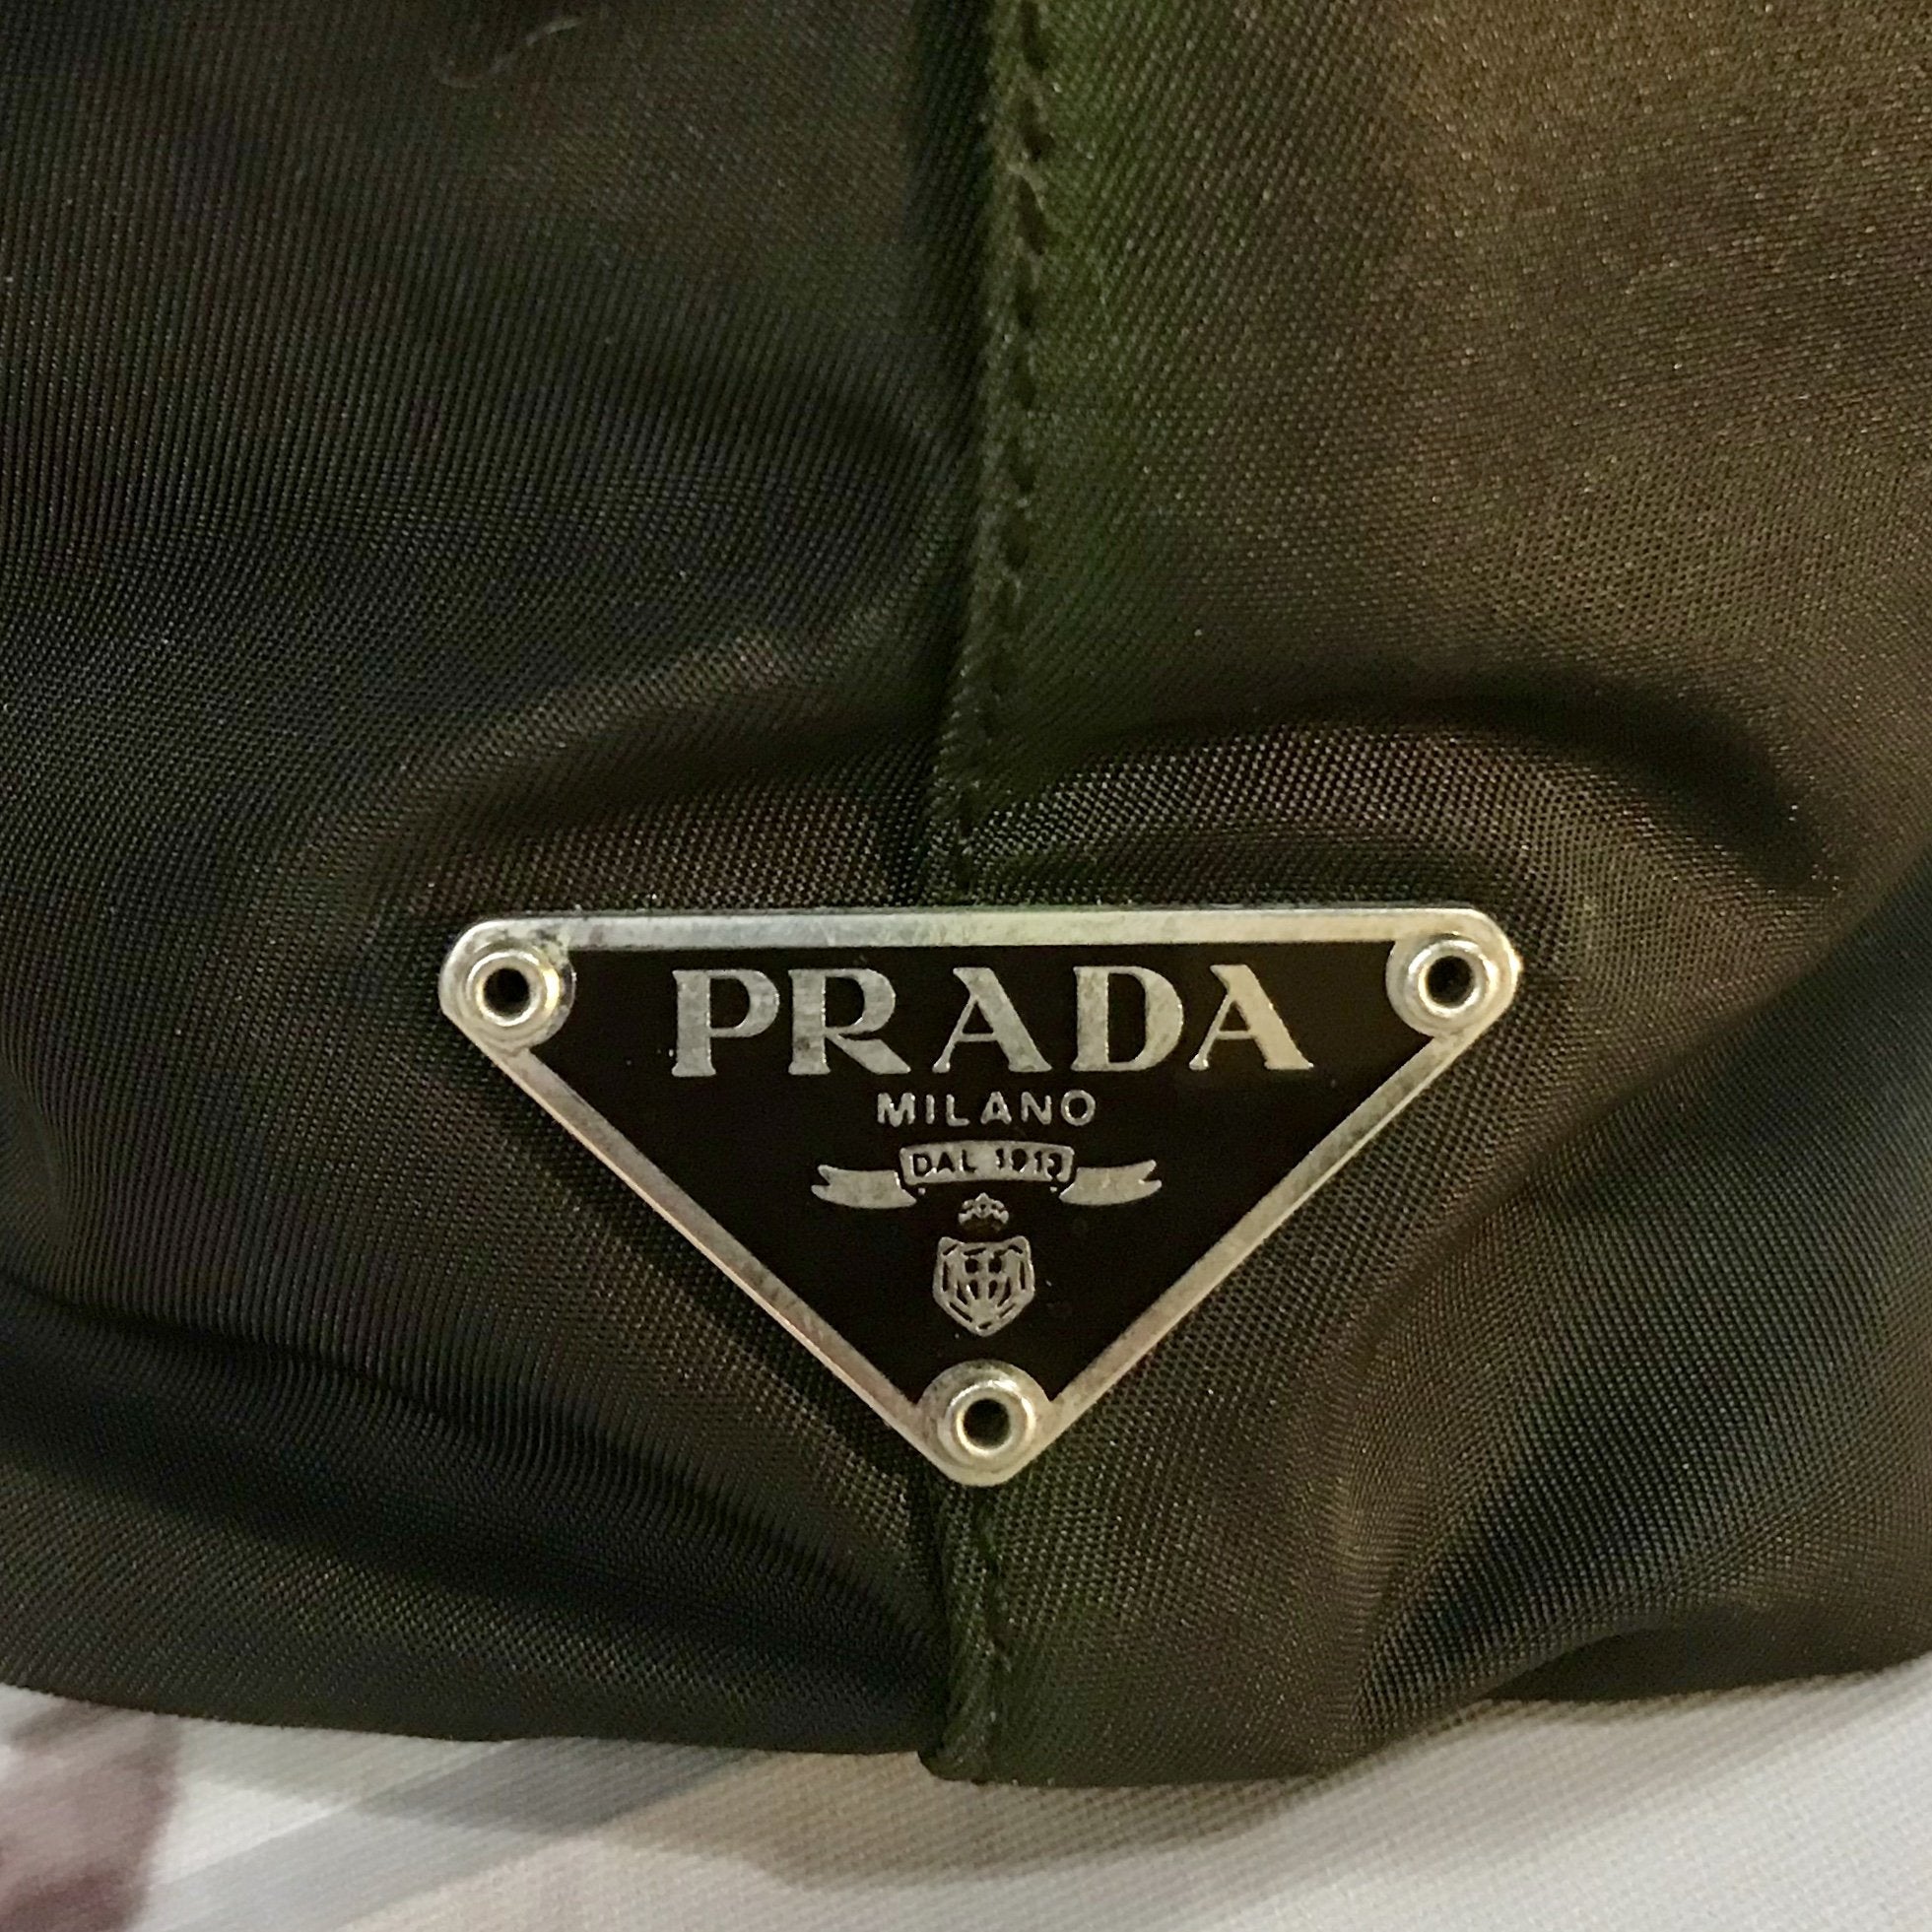 Authentic Prada bag  Prada bag, Bags, Prada